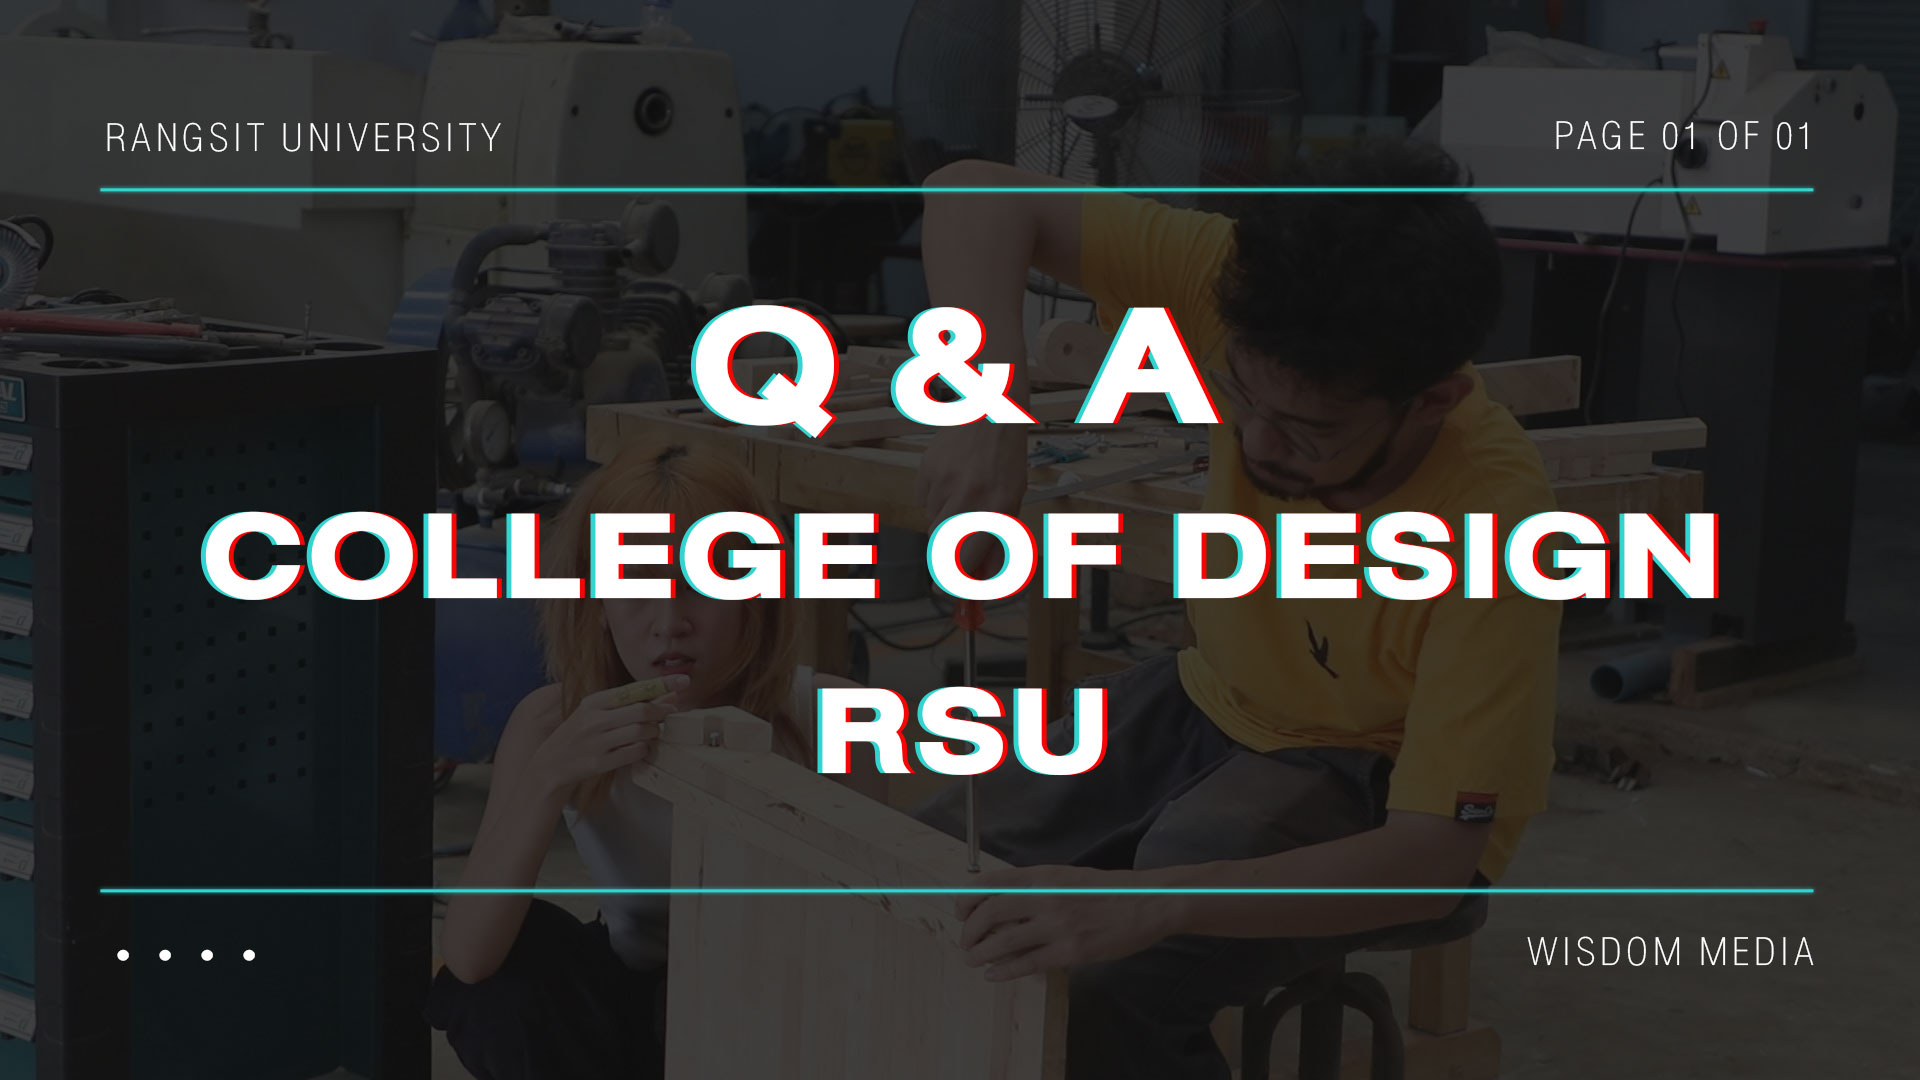 Q & A วิทยาลัยการออกแบบ ม.รังสิต | College of Design